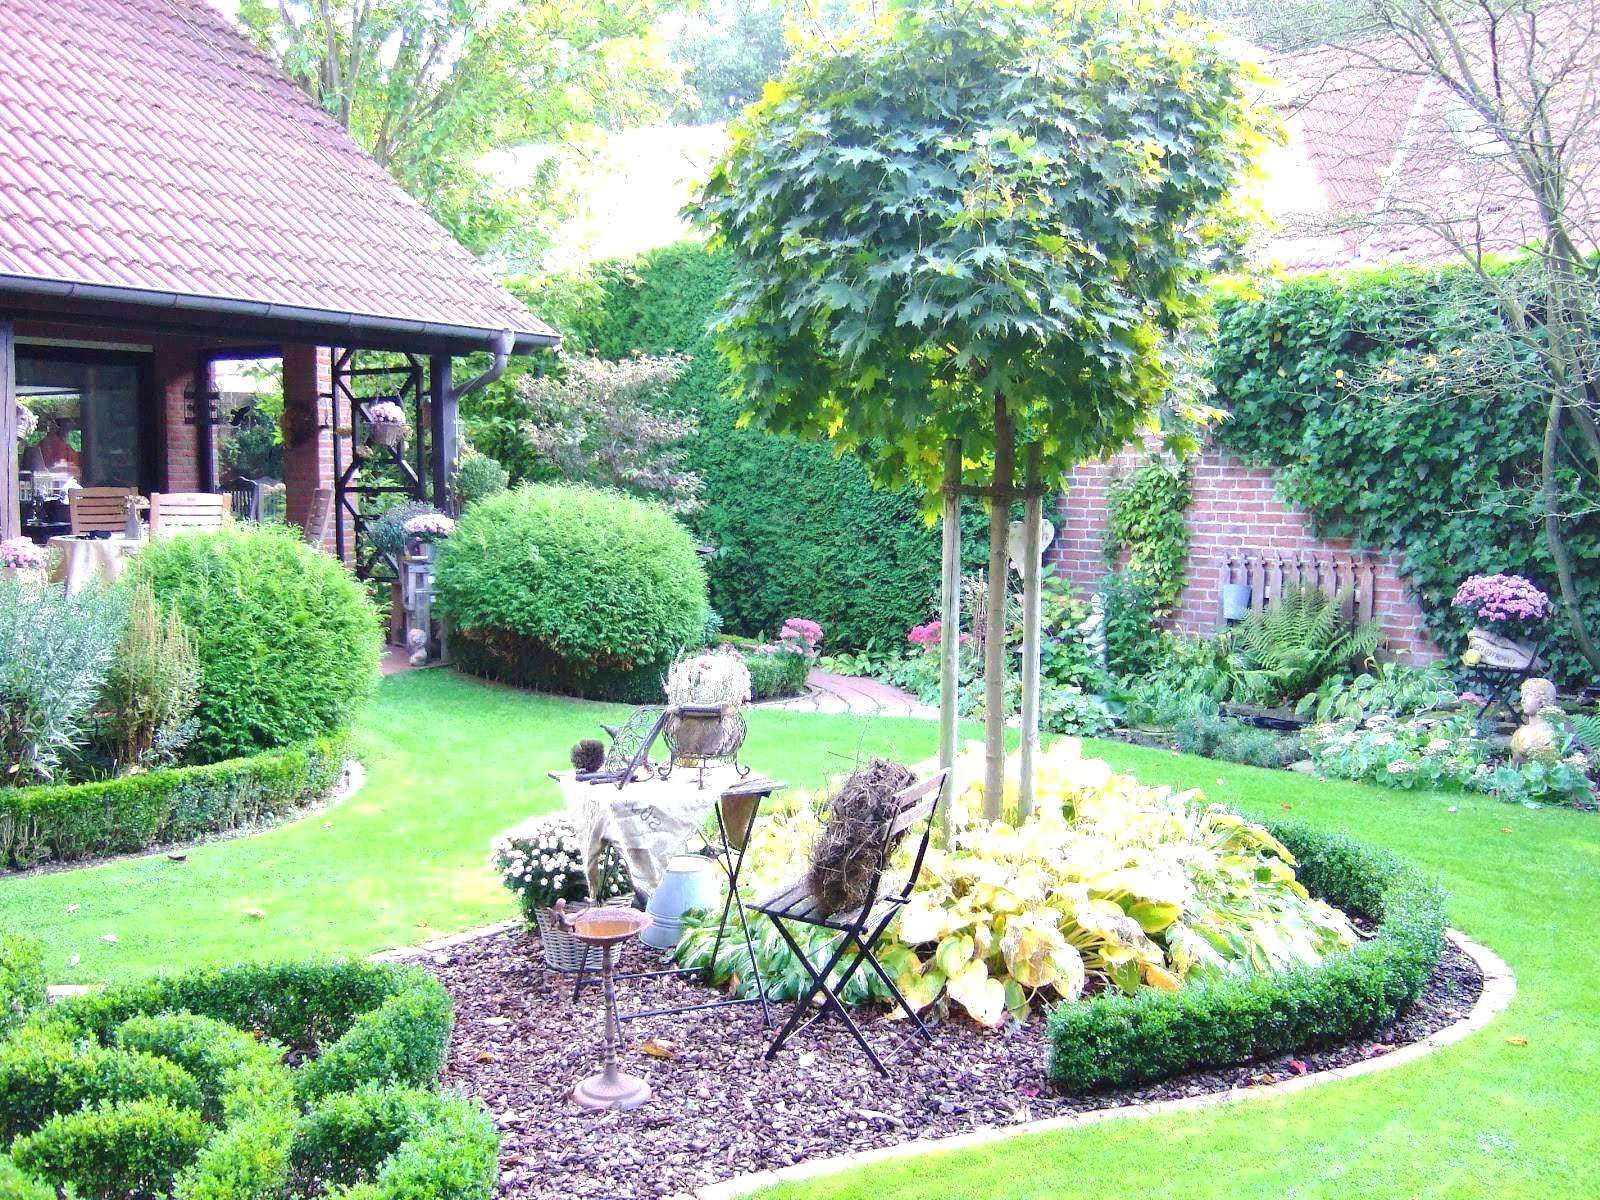 Gartengestaltung Sichtschutz Pflanzen Luxus Garten Ideas Garten Anlegen Inspirational Aussenleuchten